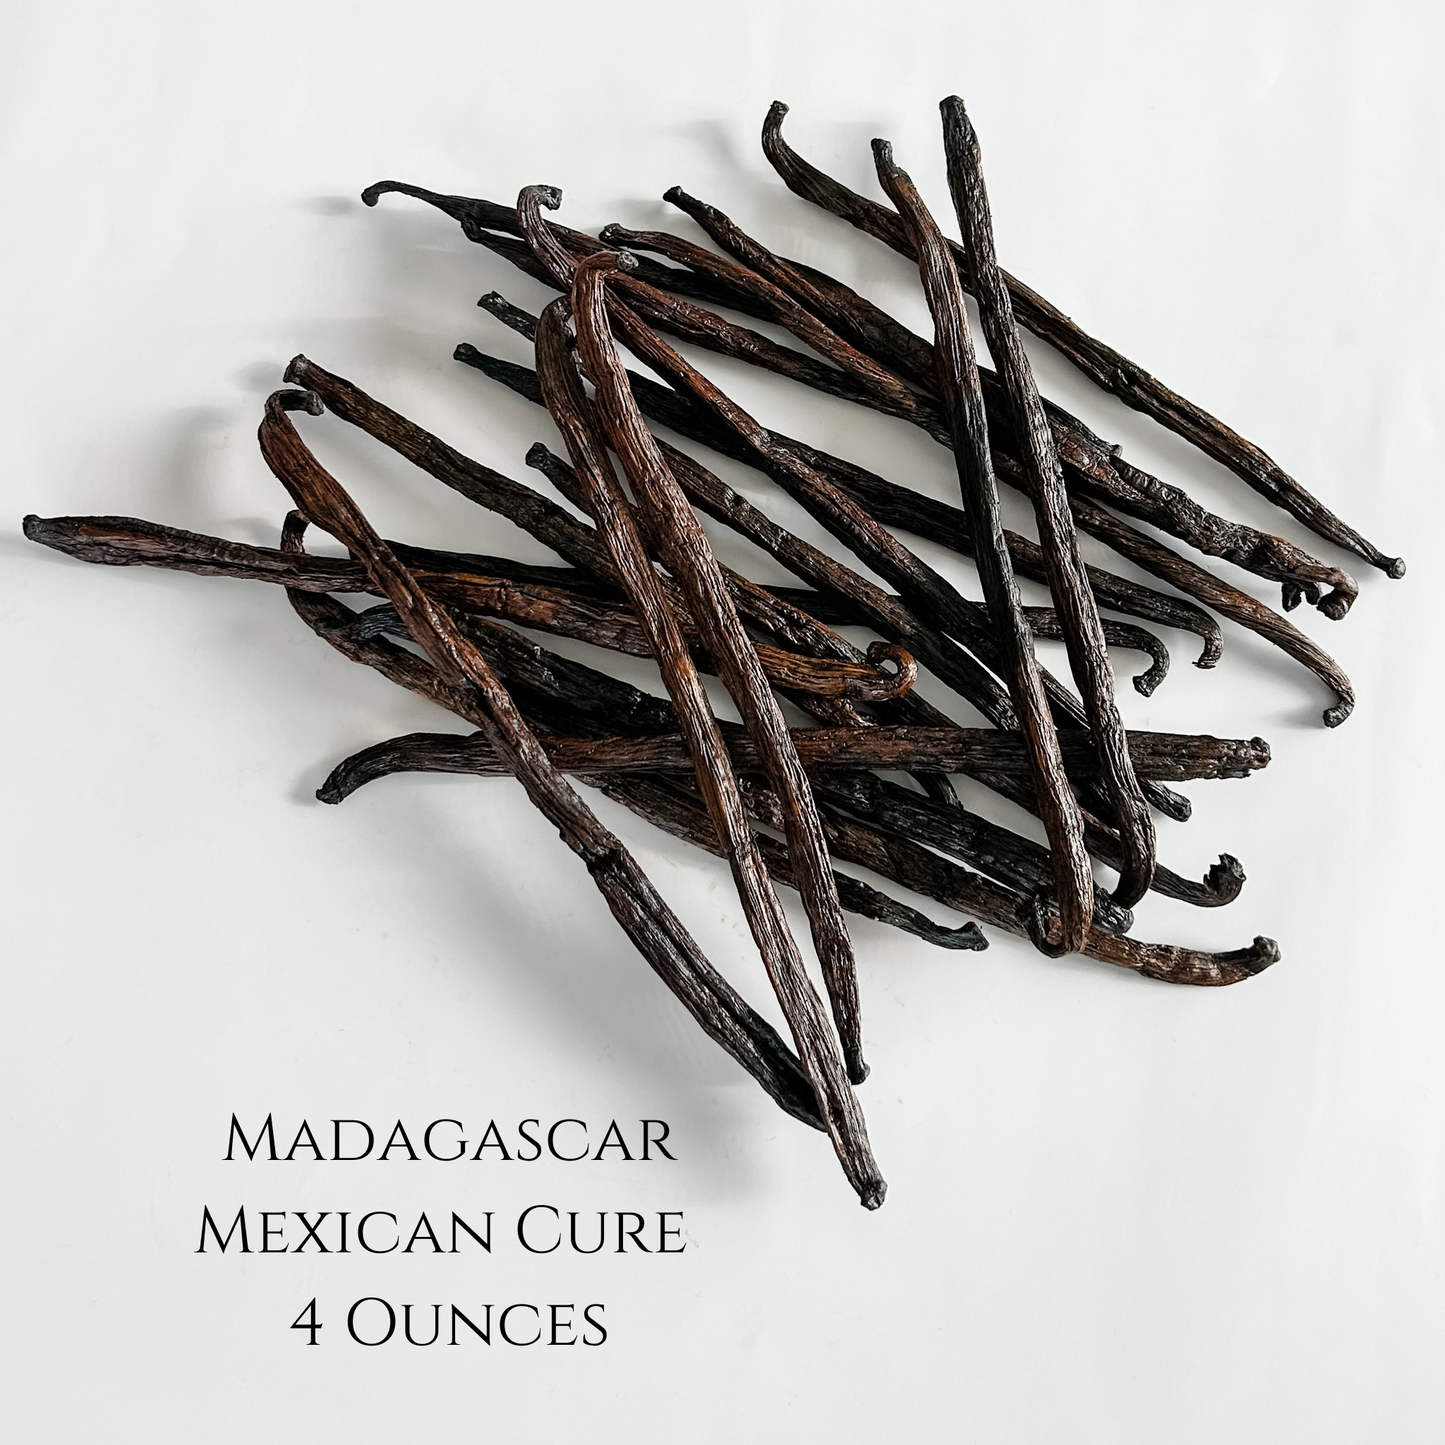 Madagascar Mexican Cure V. planifolia Vanilla Beans